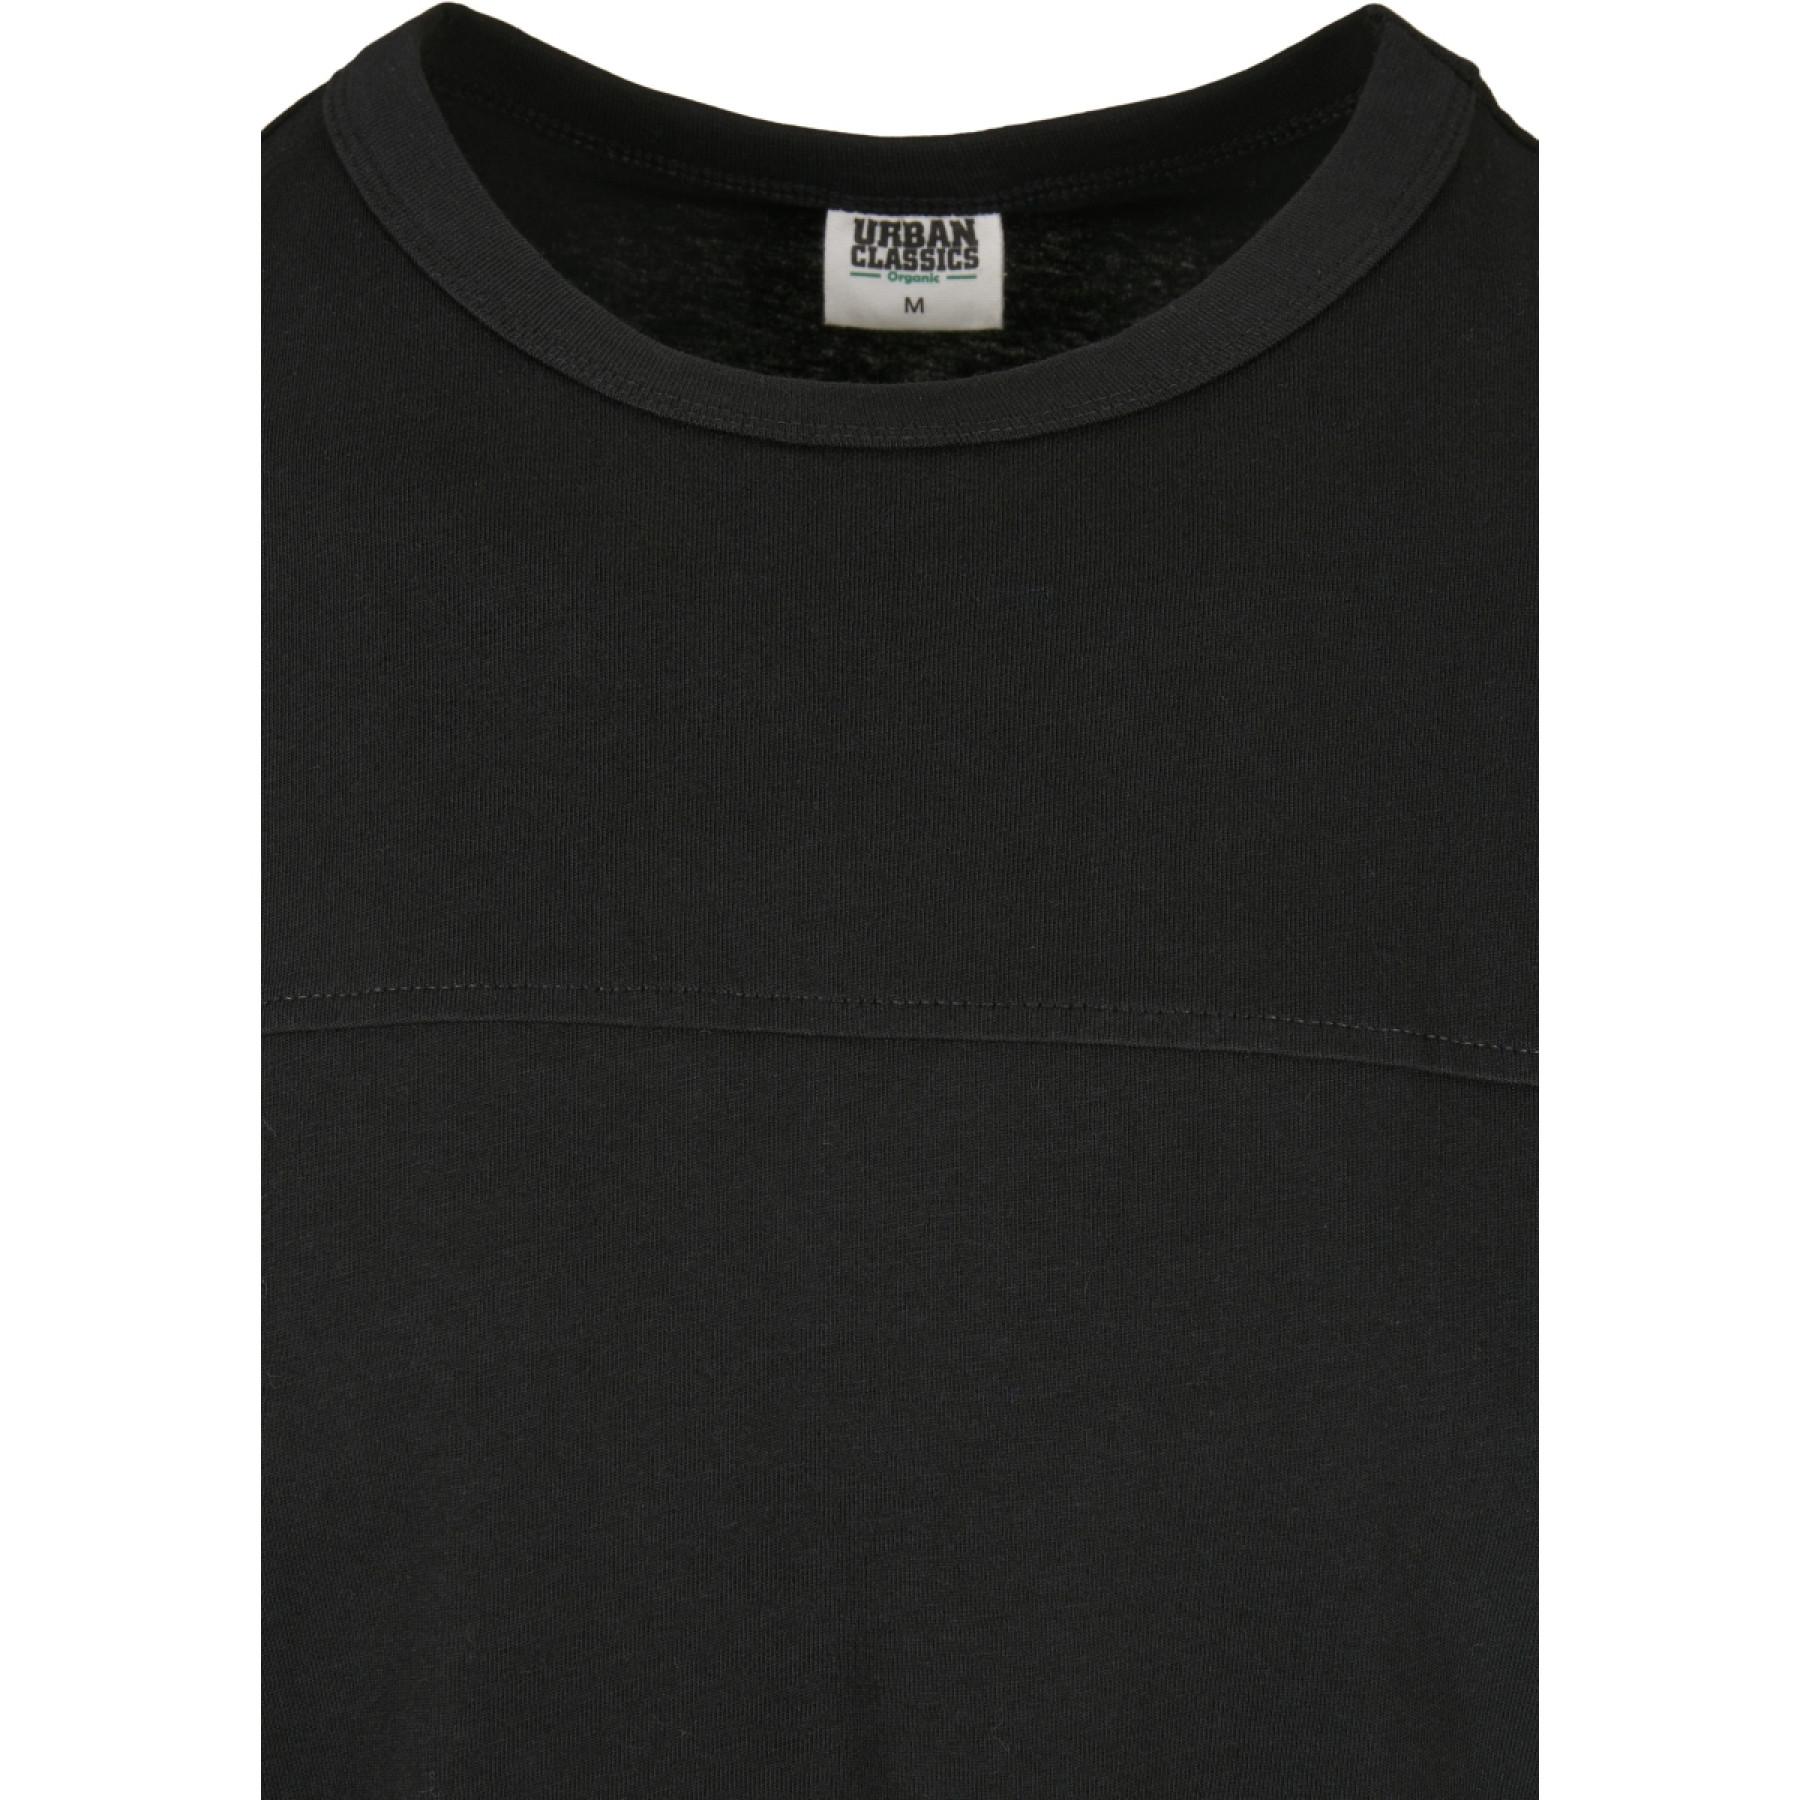 T-shirt manches longues Urban Classics coton organique oversized-grandes tailles